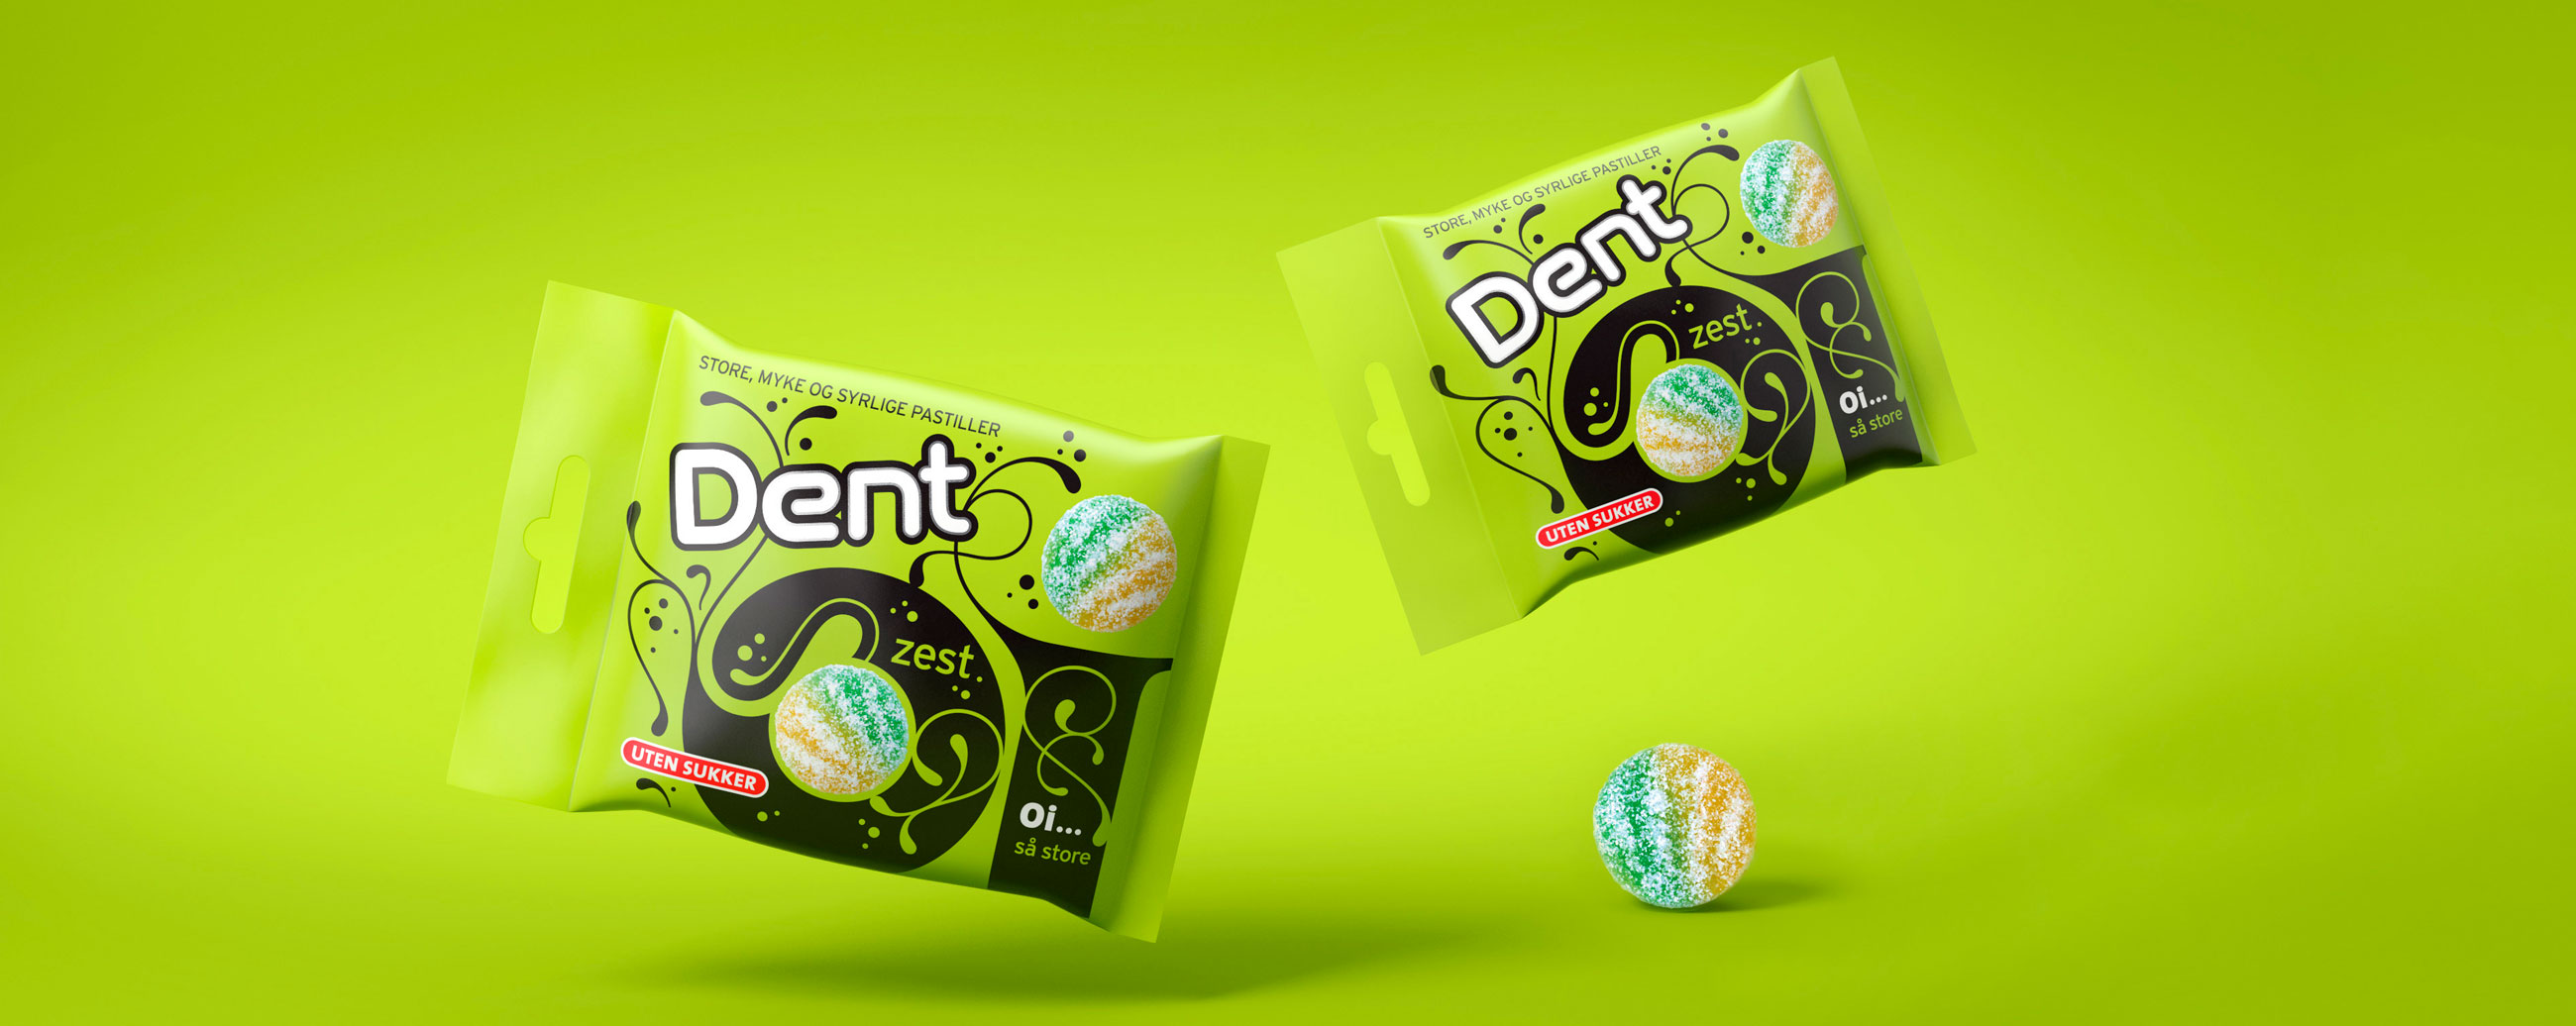 Dent Oi zest pastiller. Mint. Emballasje packaging design.